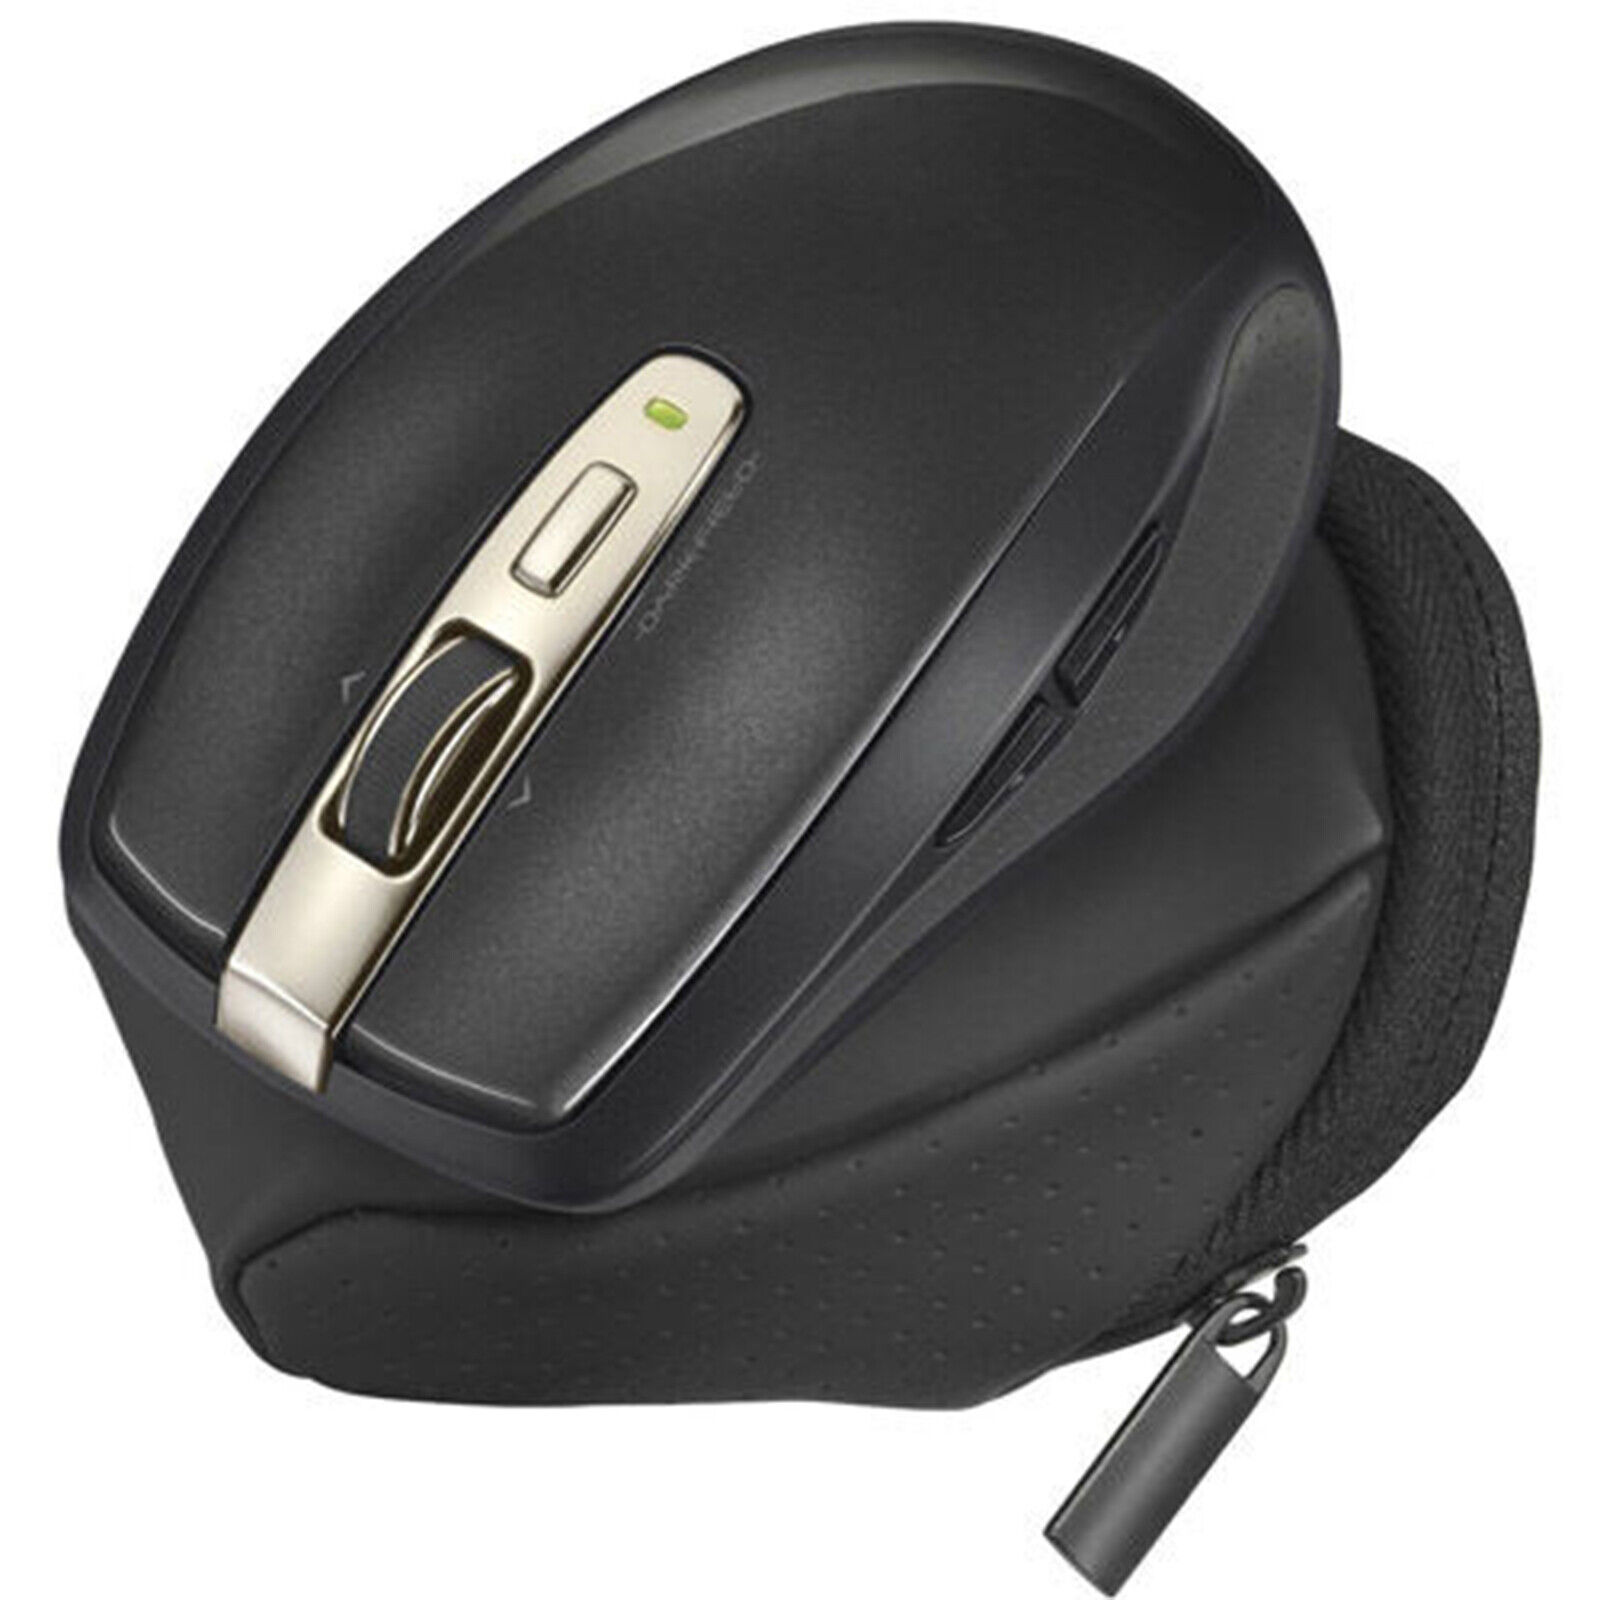 Mouse Bag Cover Zipper Pouch for Logitech M905 M325 M235 M305 M215 V470 V550 @@